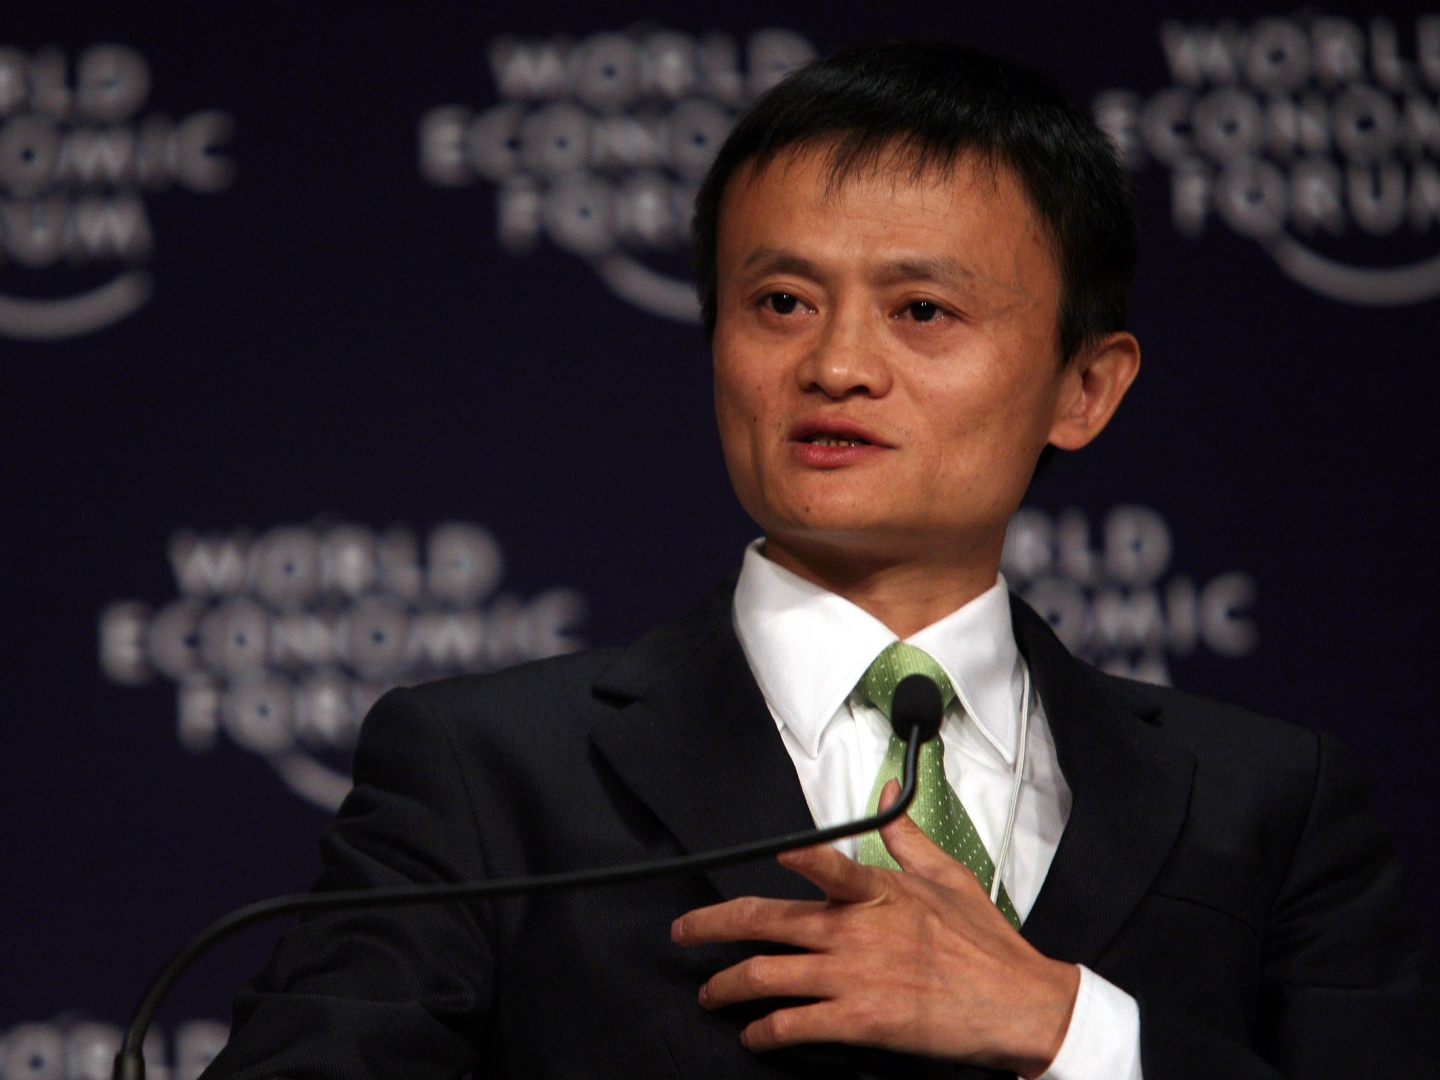 Jack Ma, grundare av Alibaba Group, investerar miljarder i hemlandet Kina. Foto: Natalie Behring/World Economic Forum